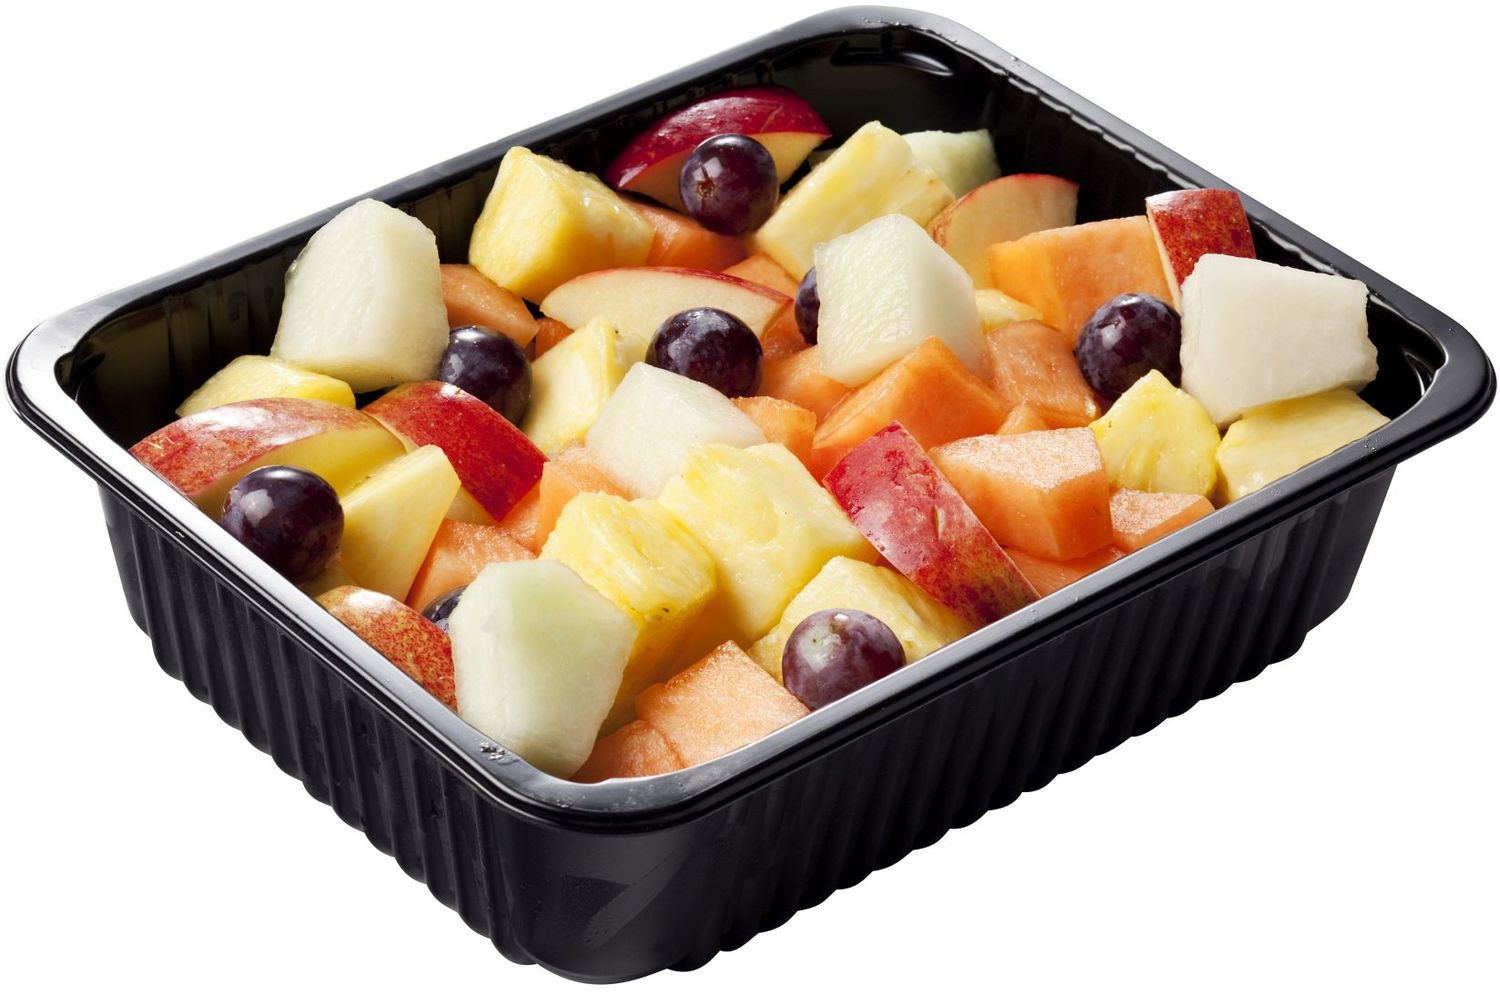 Fruitsalade standaard 1kg kist 8 stuks 1